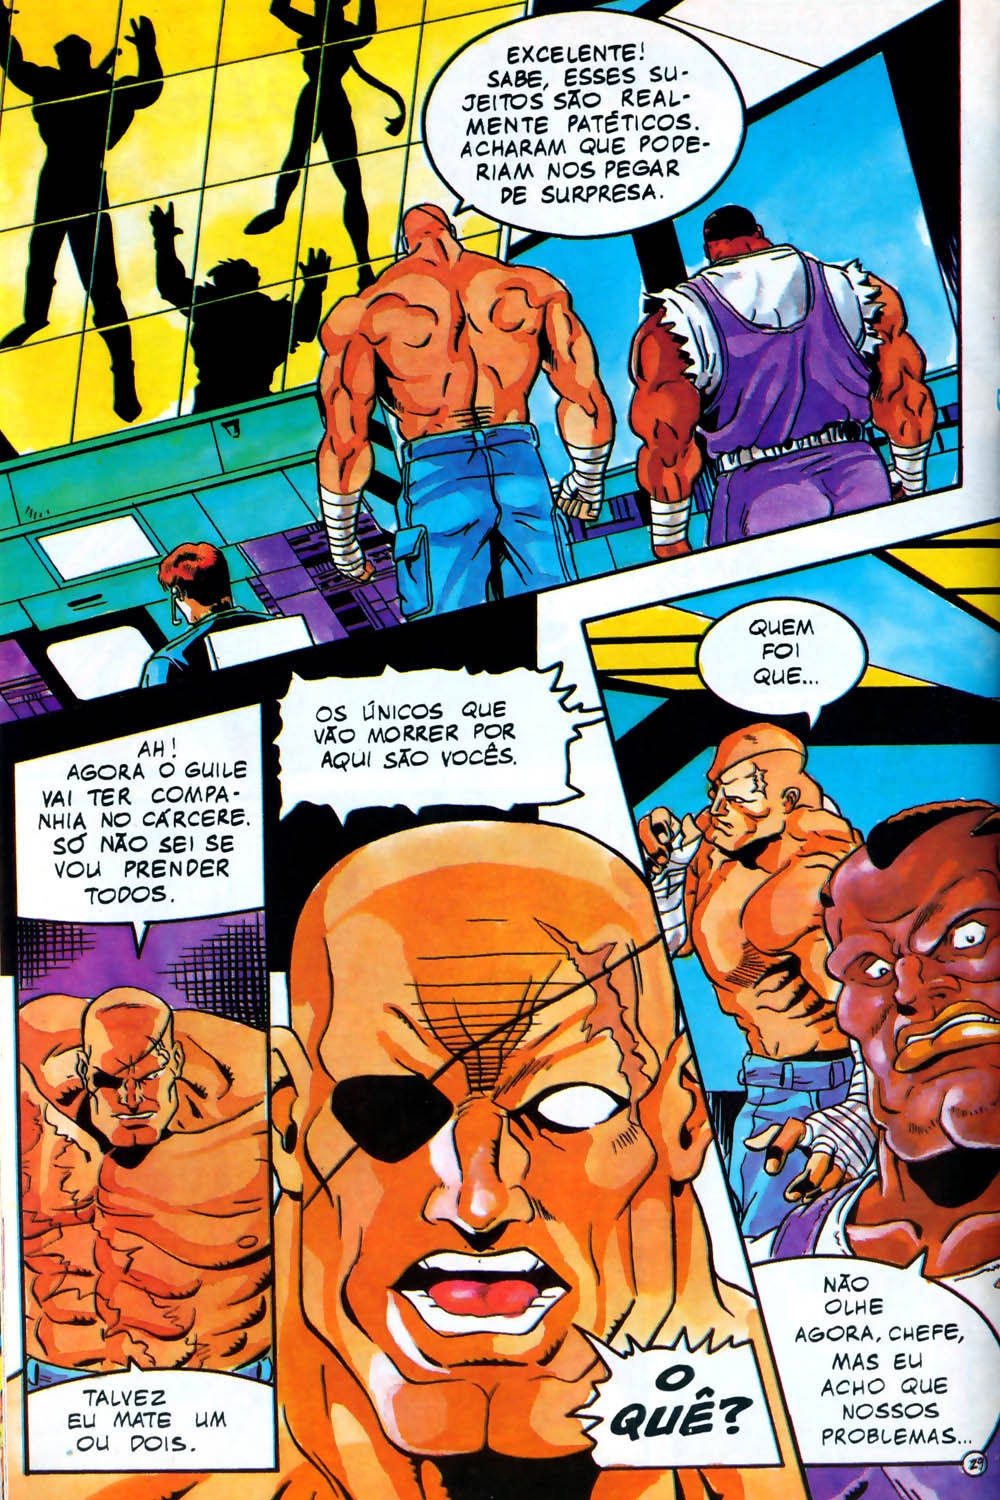 Street Fighter Brazilian comic PT-BR 15 31